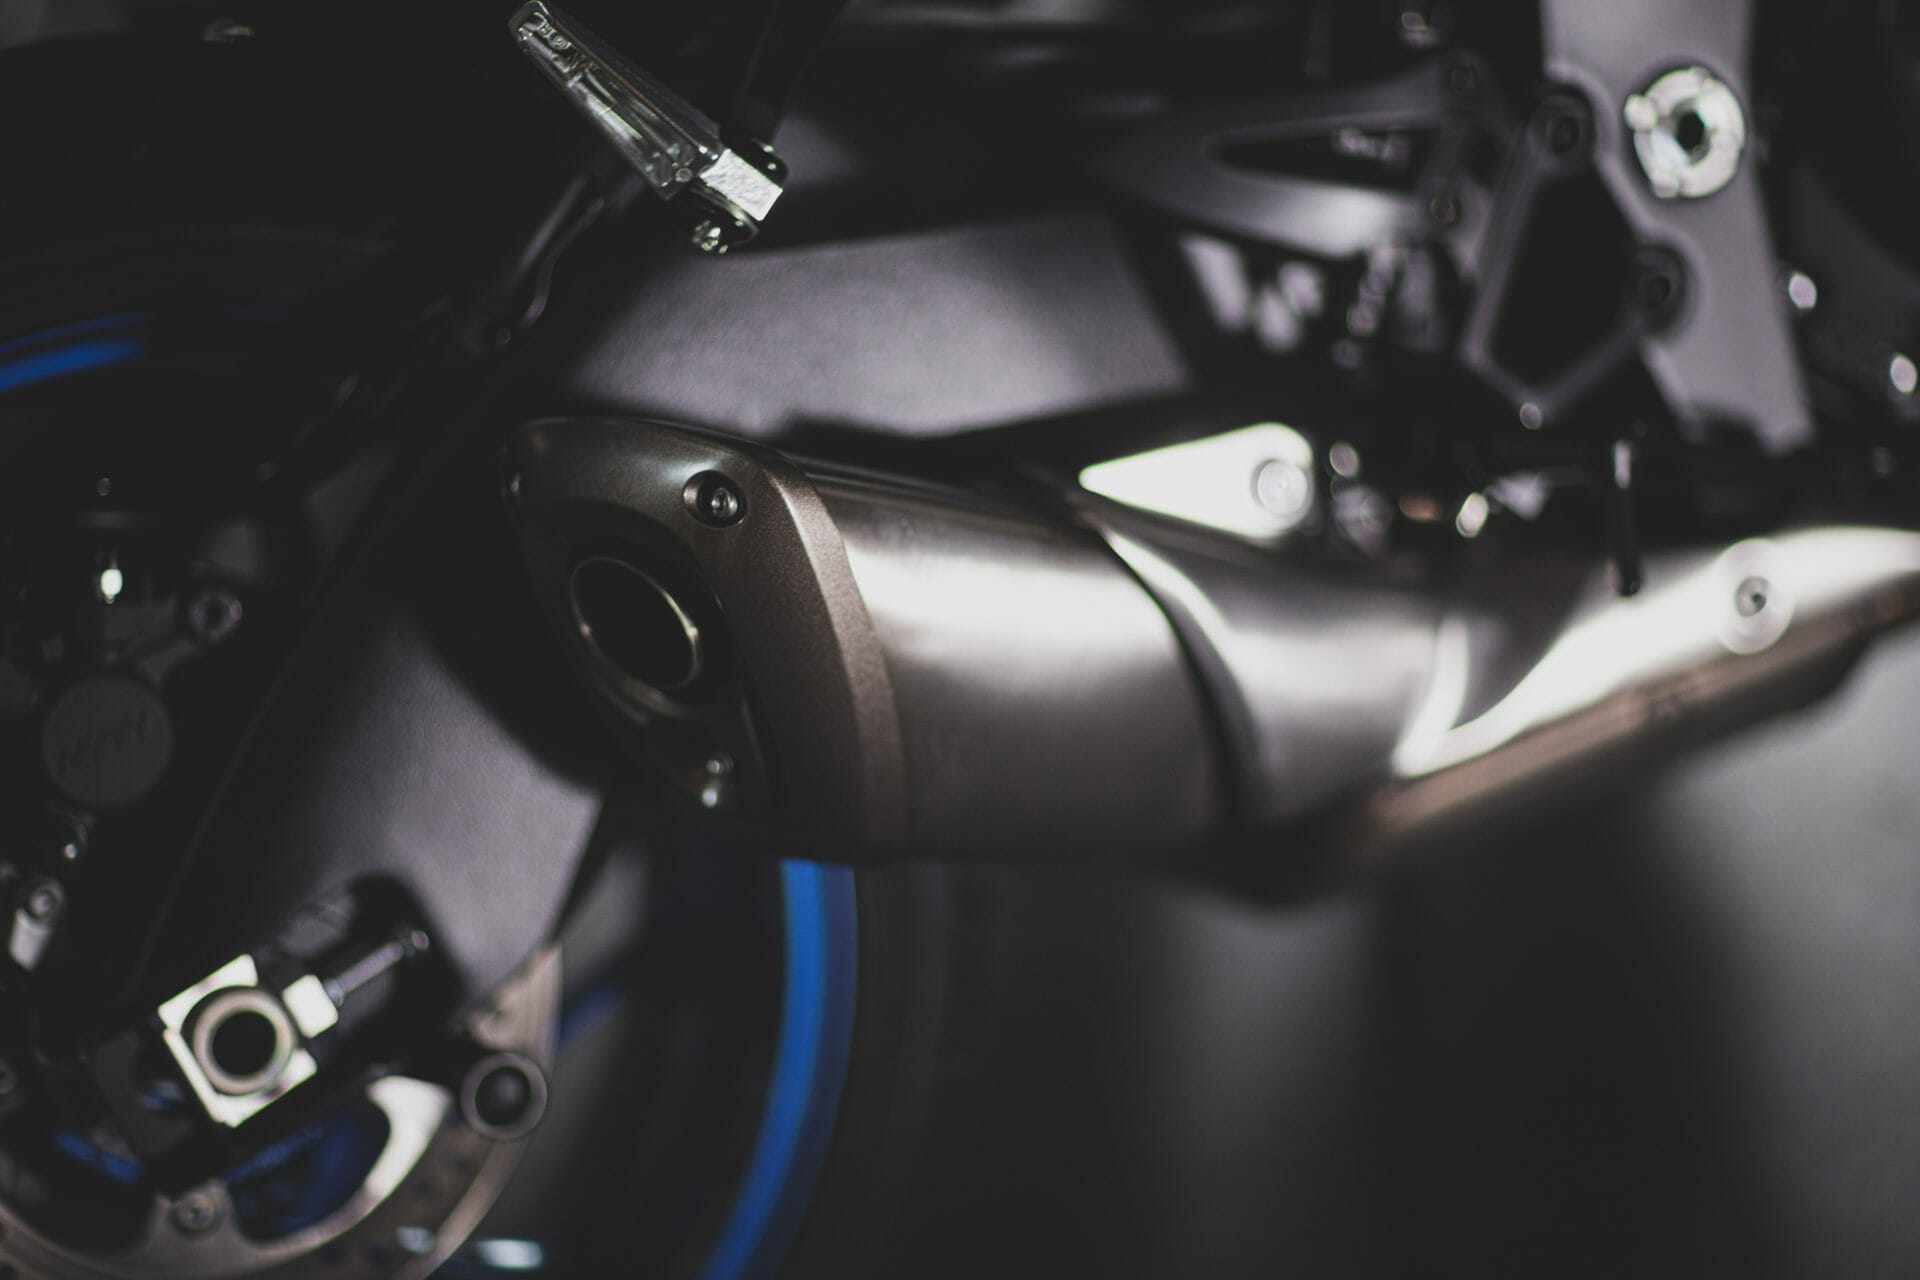 Hints of tourer Suzuki GSX-S1000T
- also in the MOTORCYCLES.NEWS APP